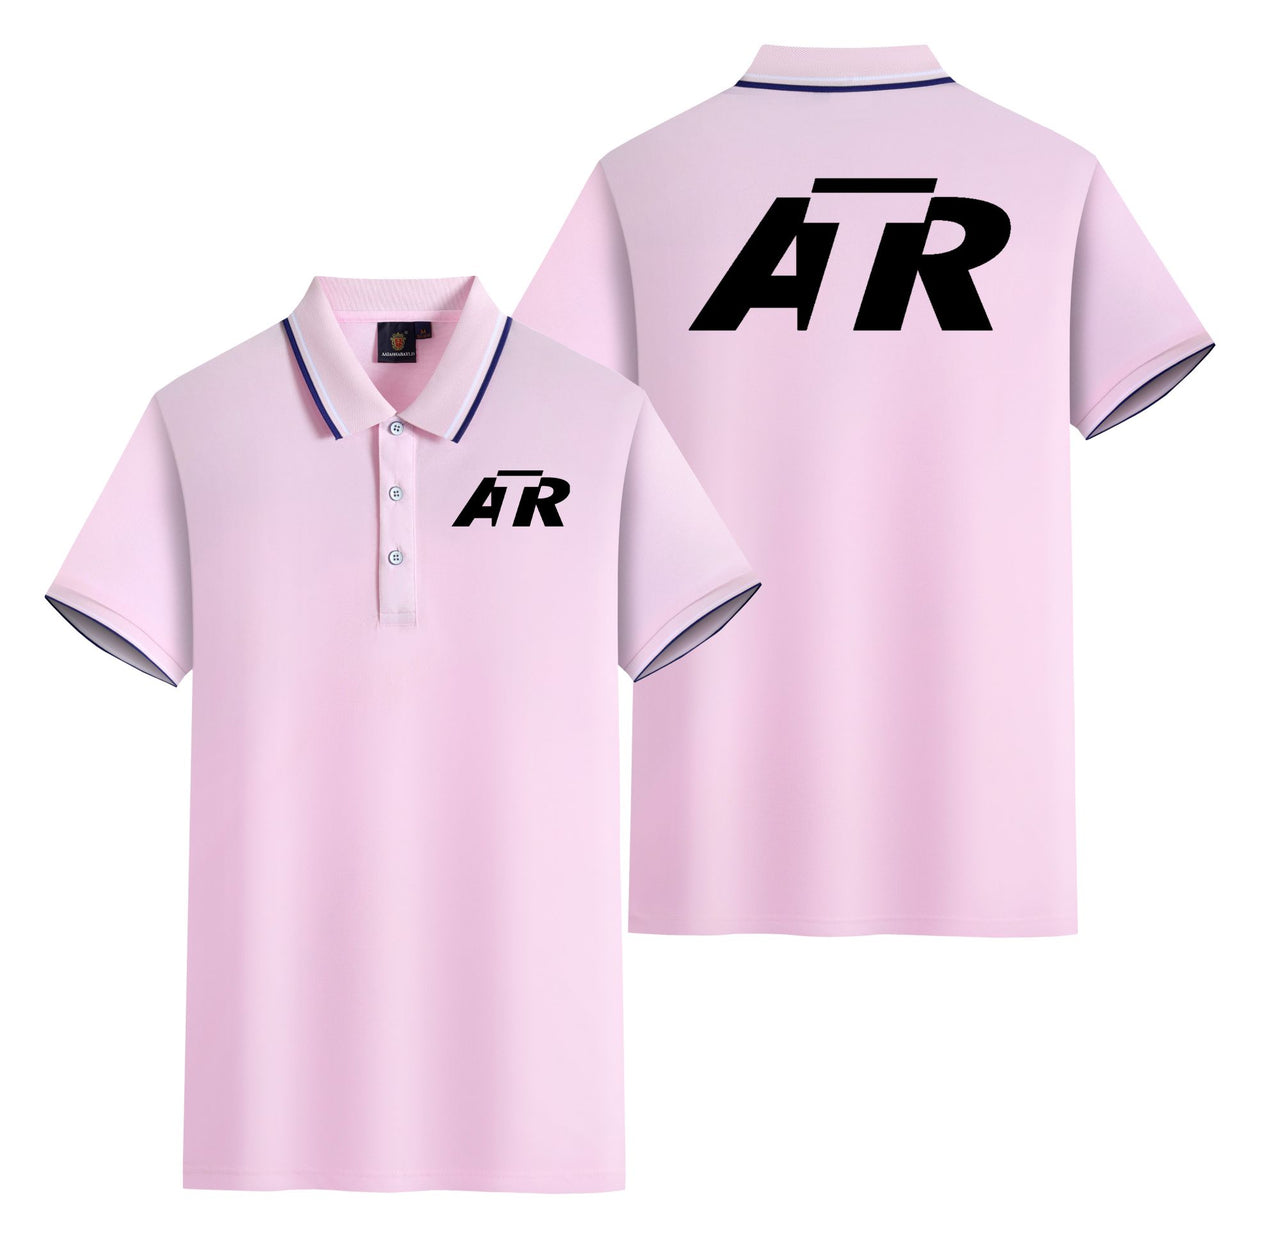 ATR & Text Designed Stylish Polo T-Shirts (Double-Side)